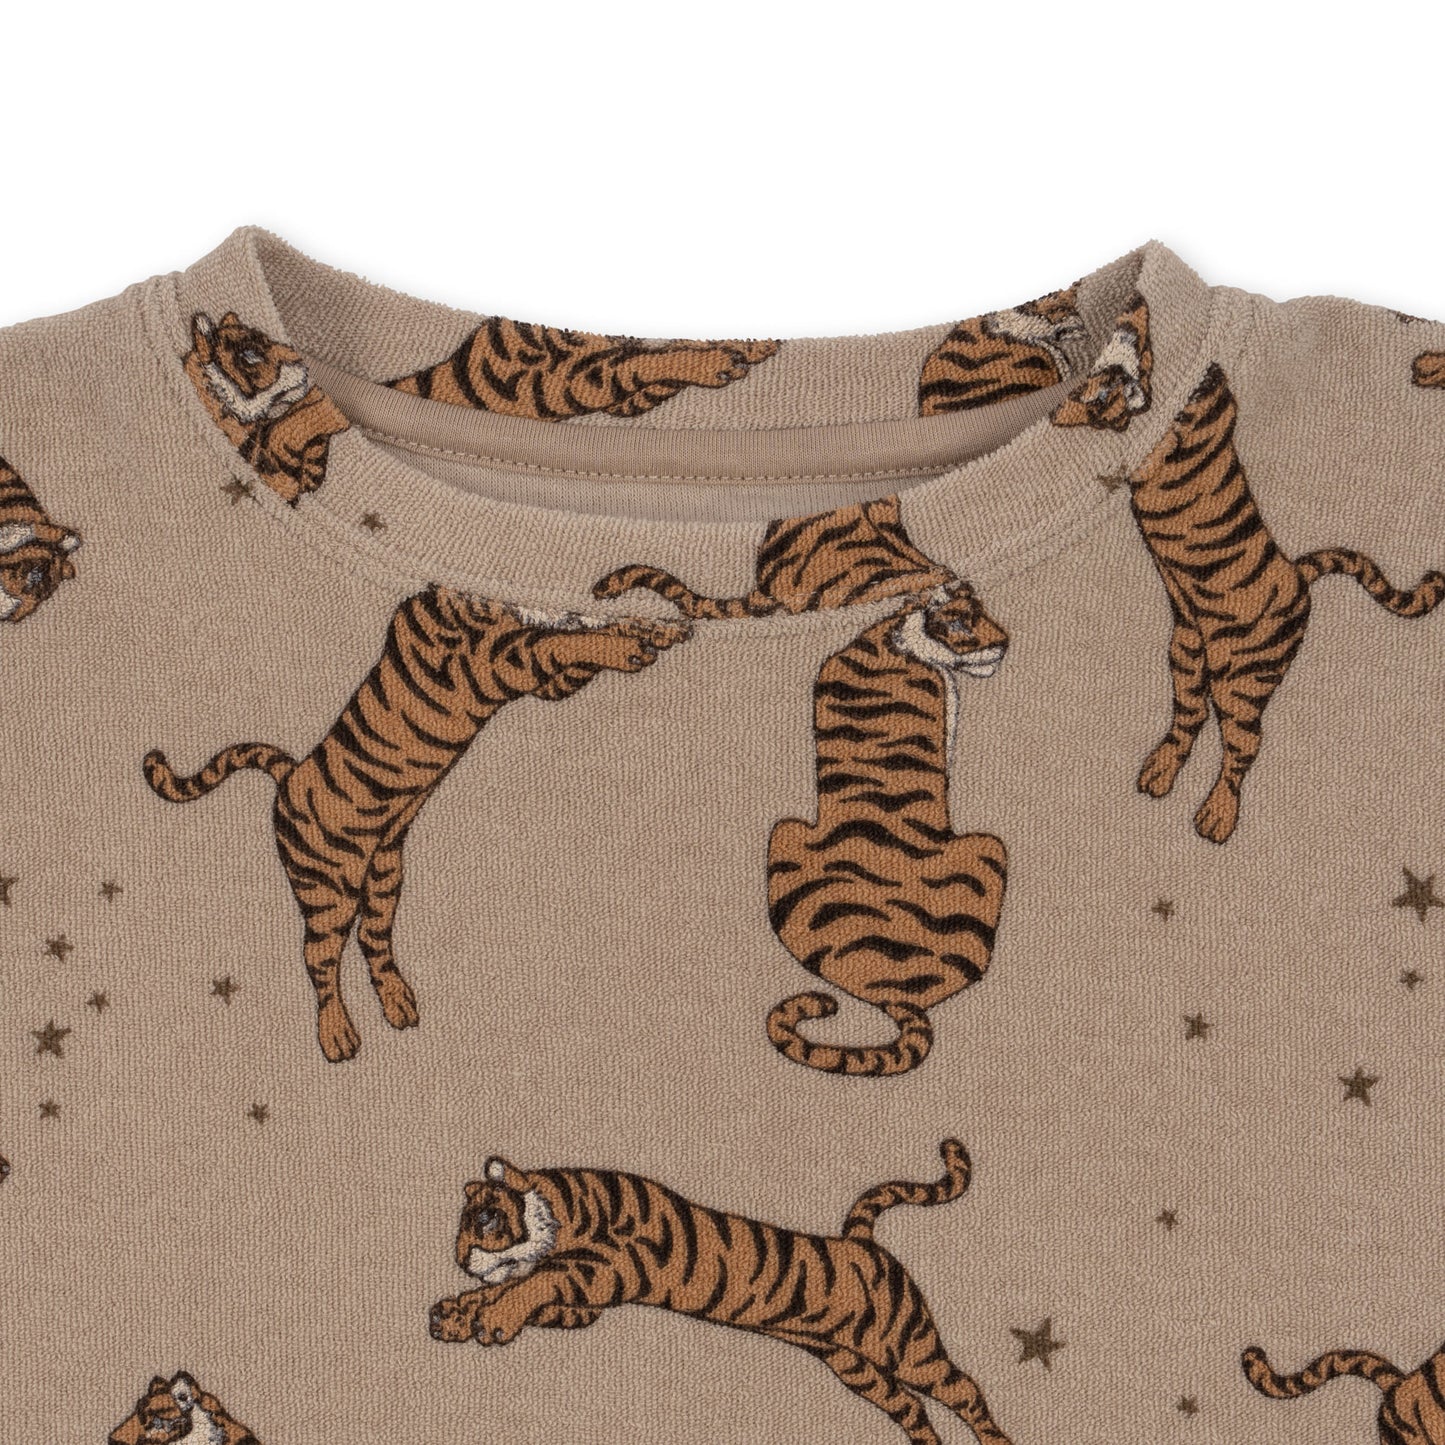 Itty Sweatshirt in Tiger Sand